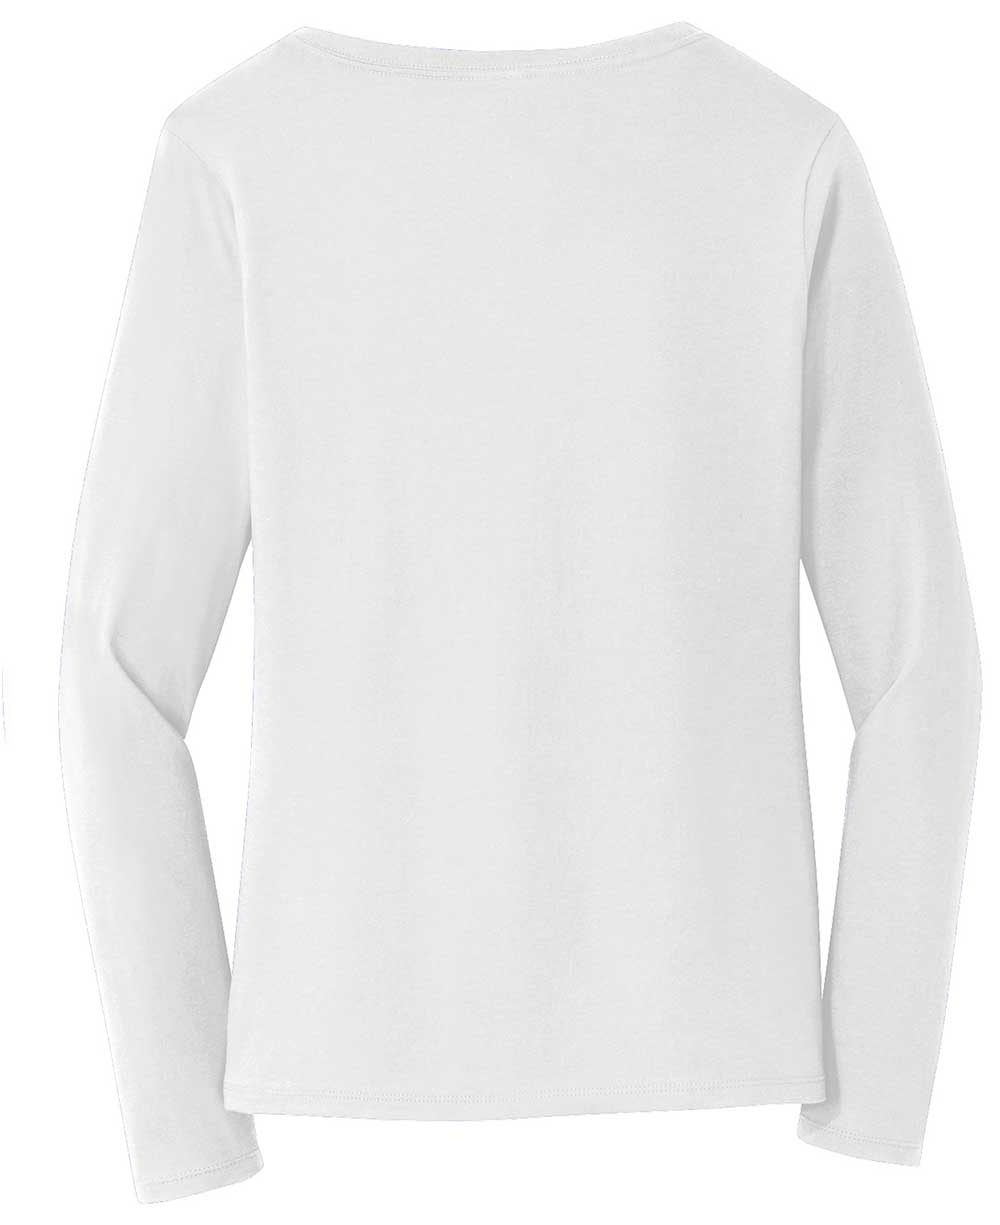 Namaste Penguin T-Shirt in White - Shirts & Tops S